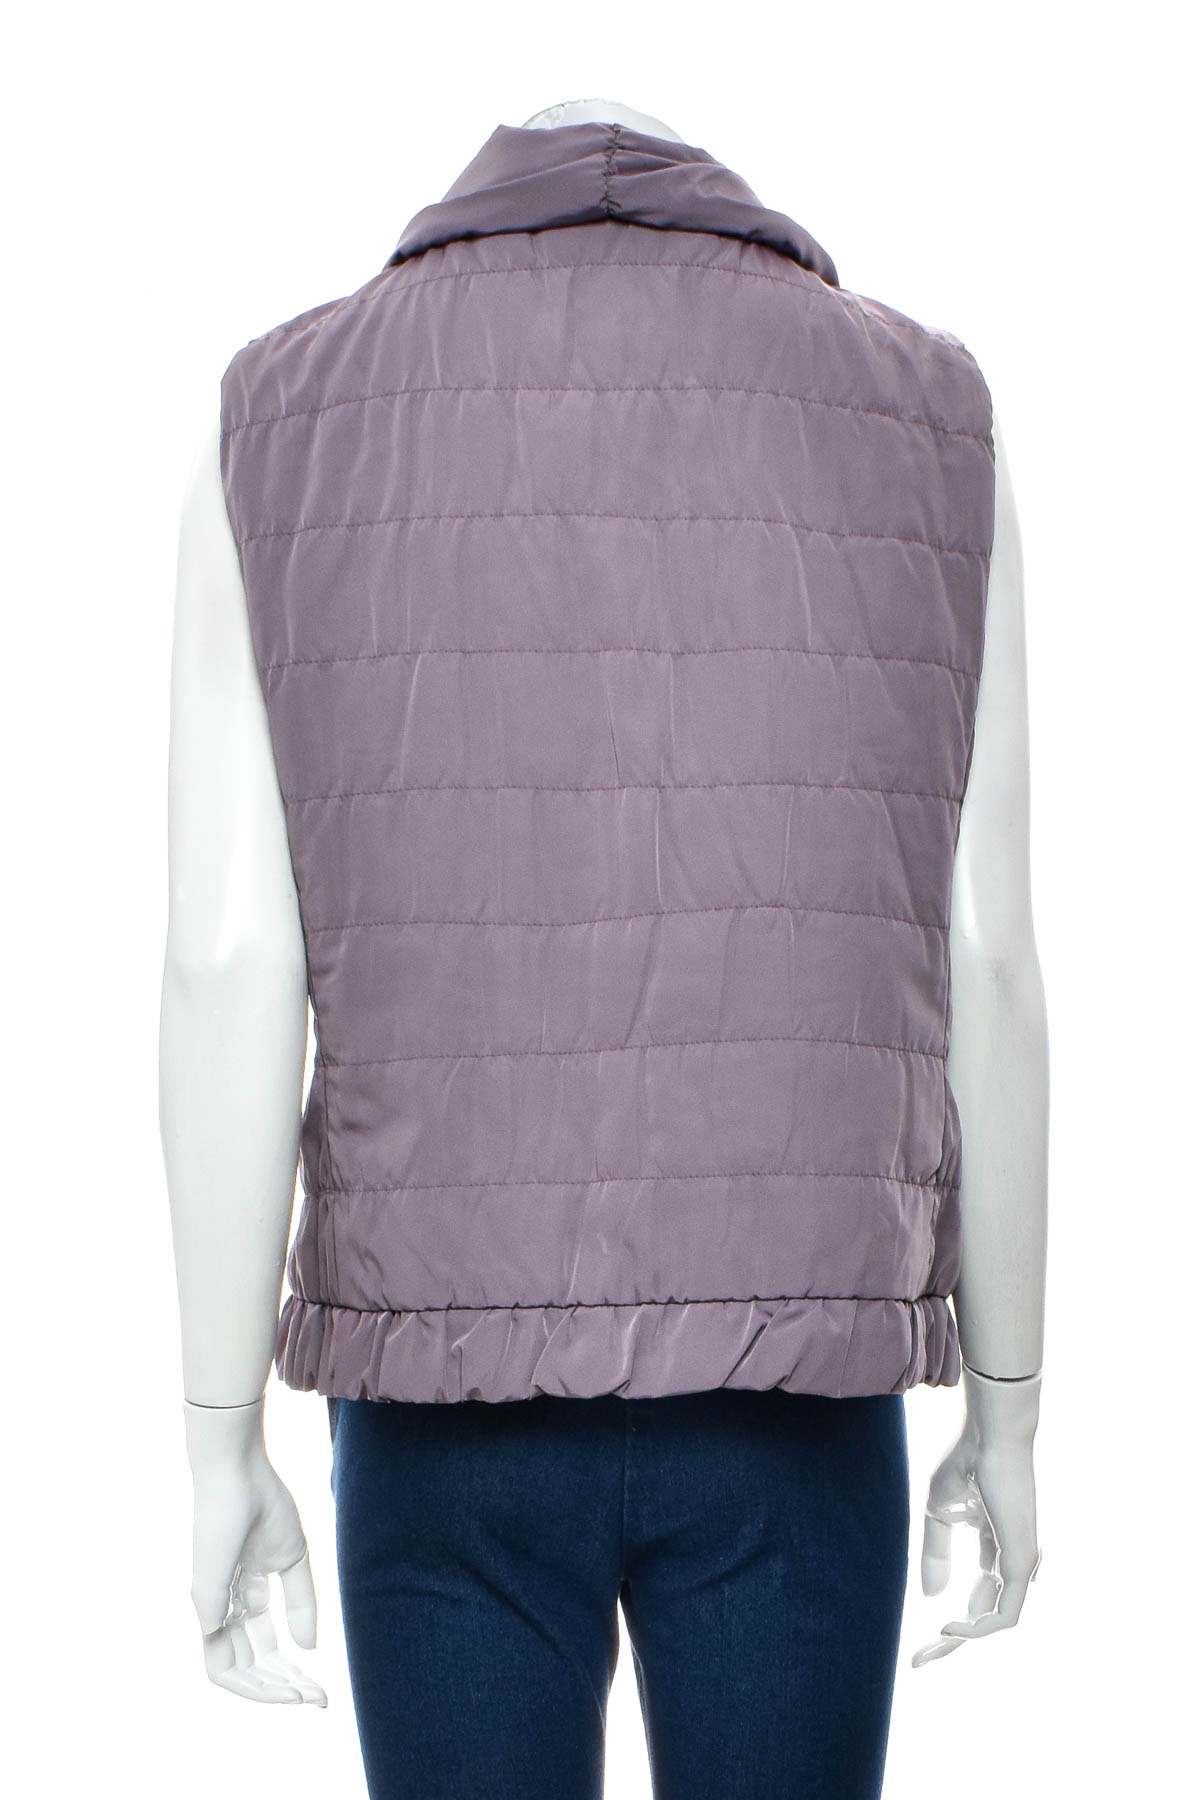 Women's vest - Conbipel - 1